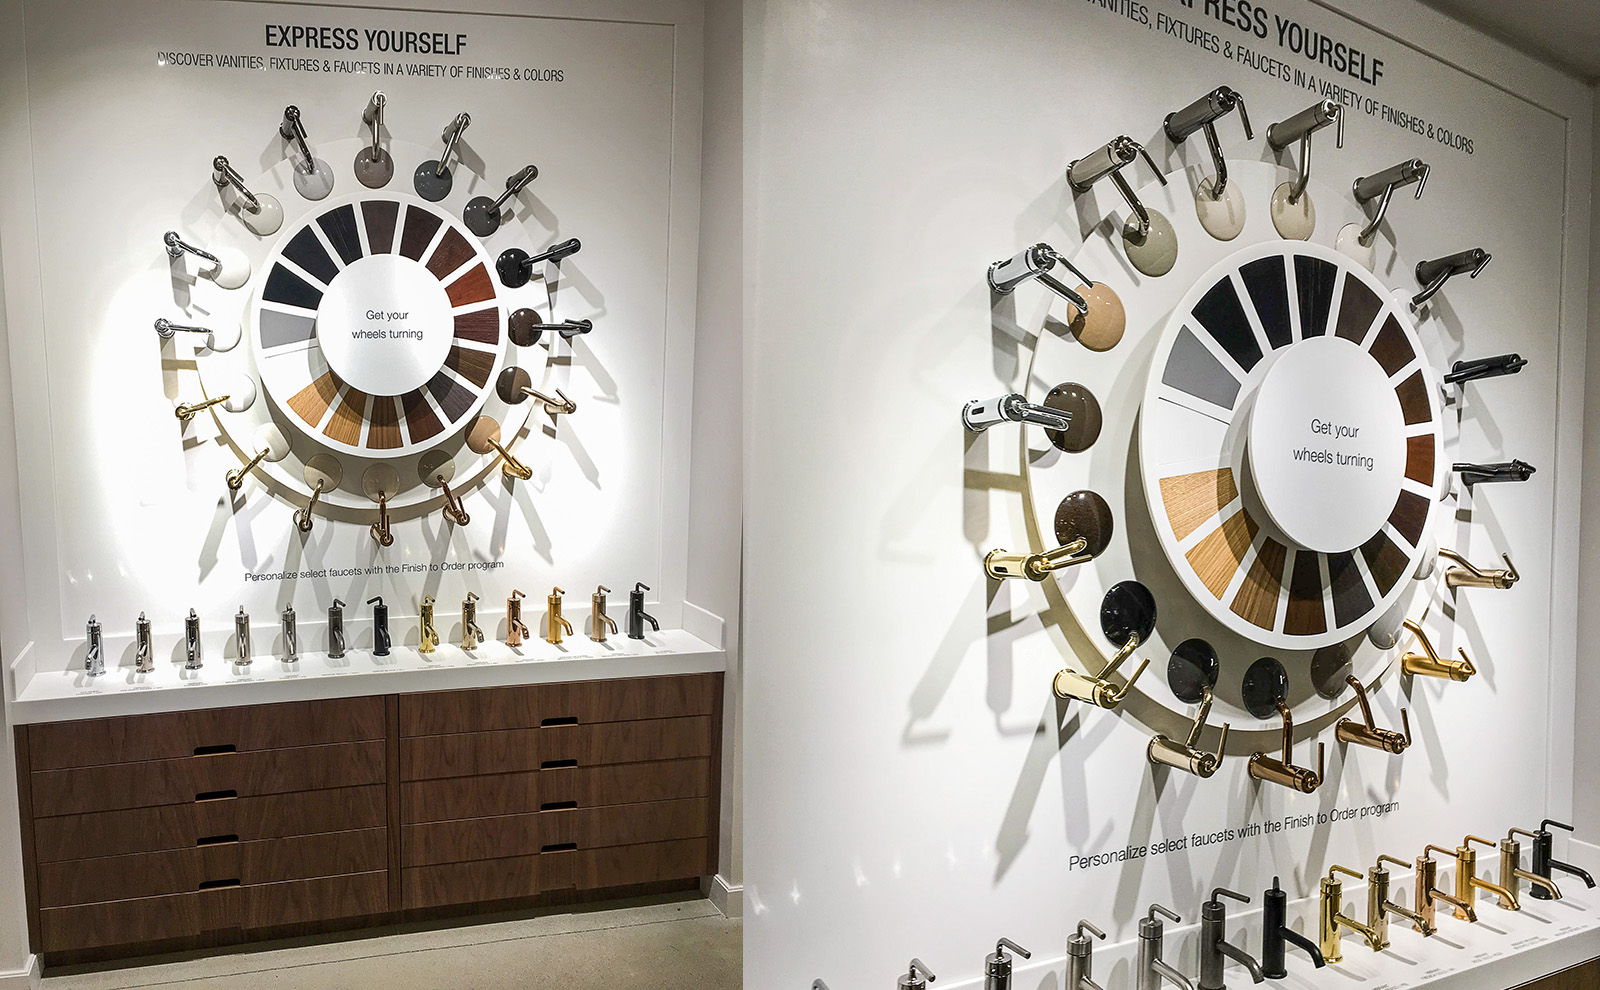 The final spinner wheel installed in the Kohler NYC showroom